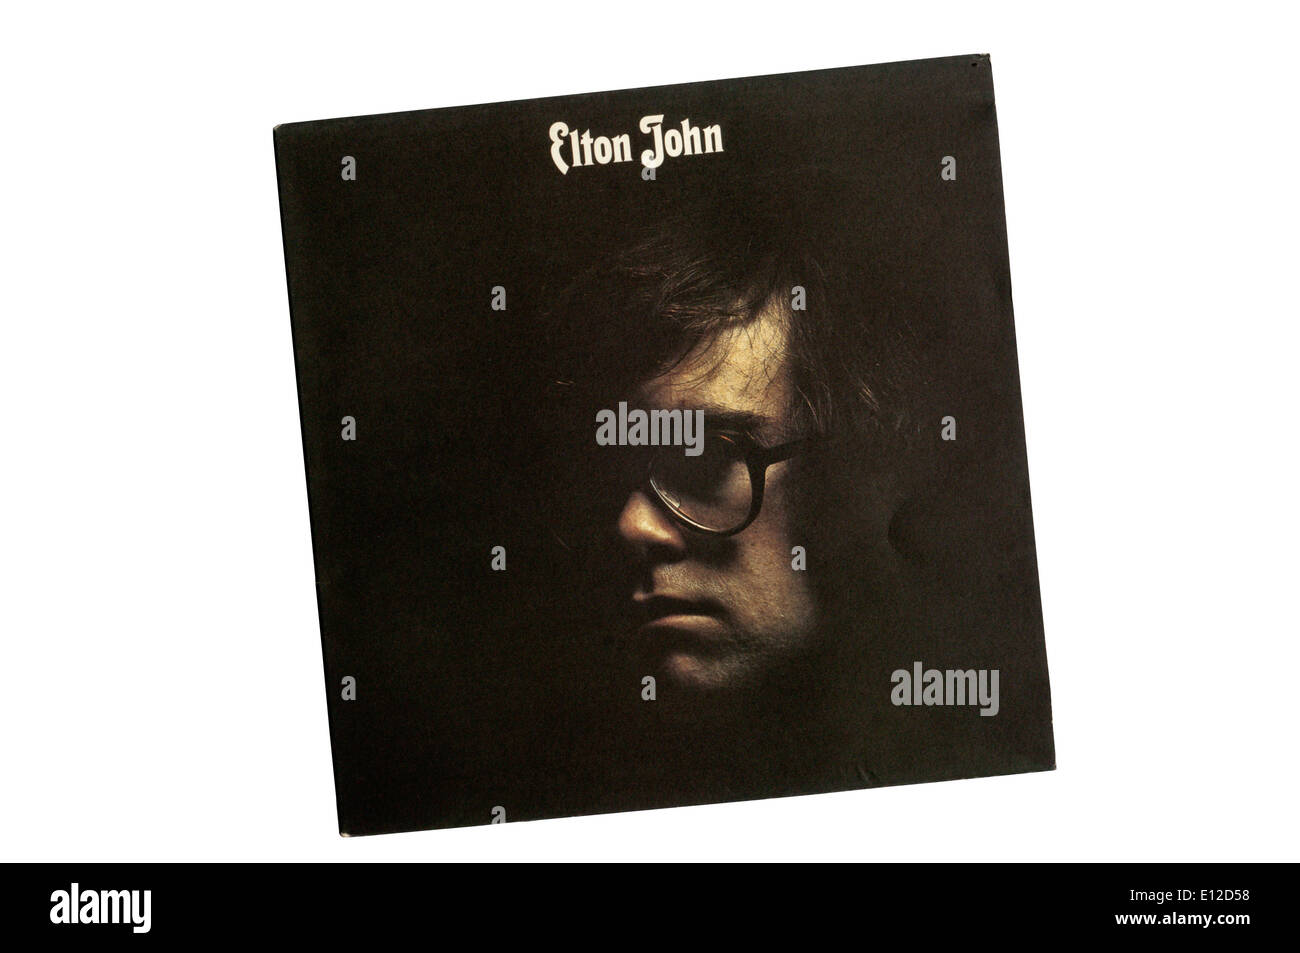 The eponymous Elton John was the second album by English singer / songwriter Elton John, released in 1970. Stock Photo